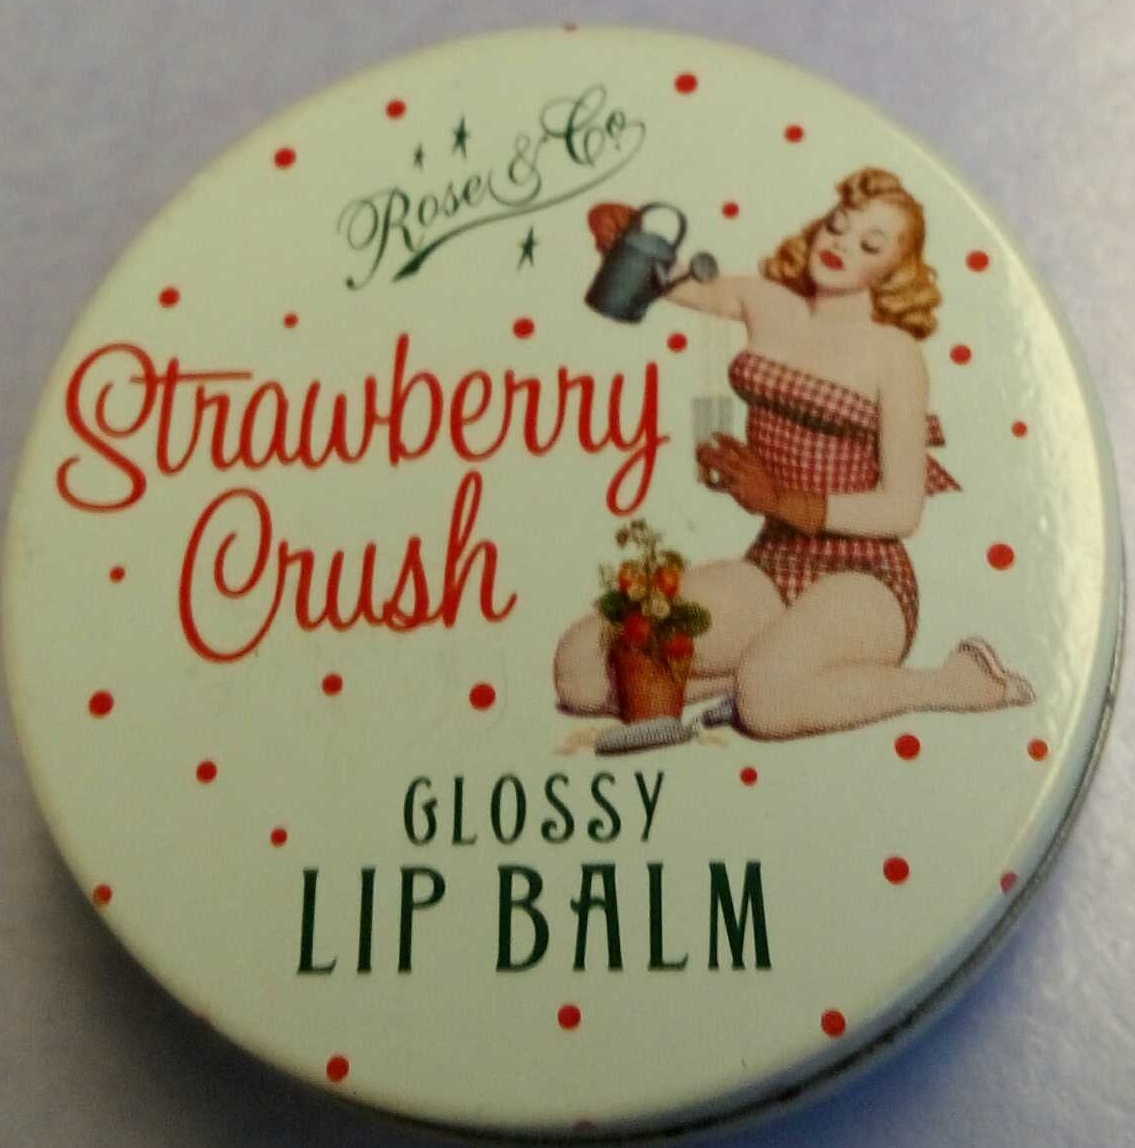 Strawberry Crush - Product - fr